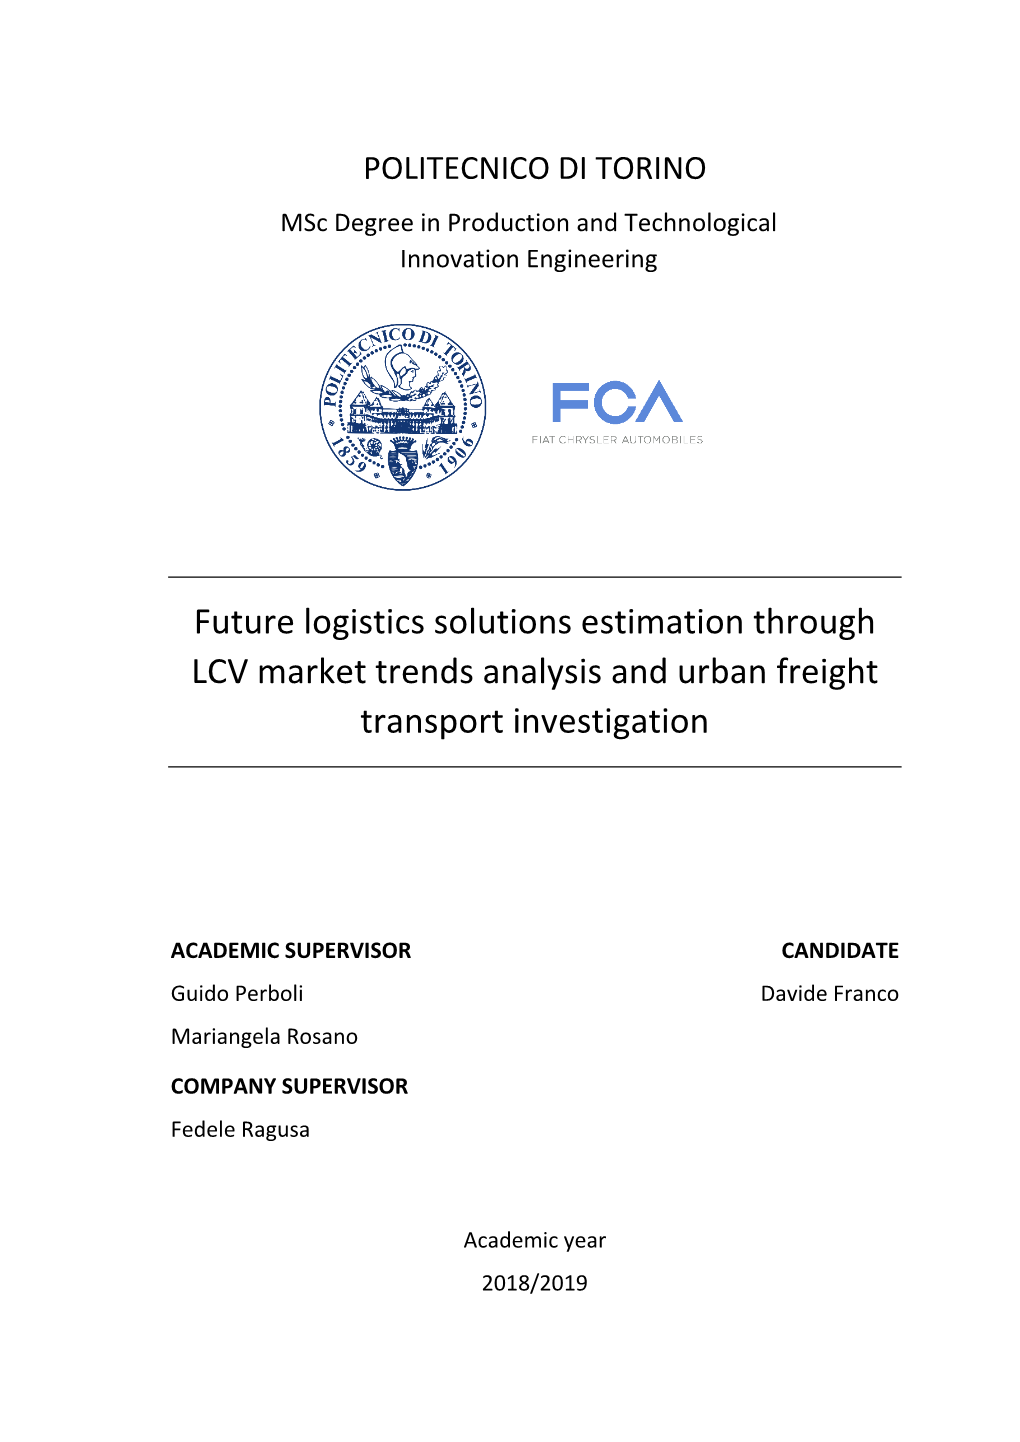 Future Logistics Solutions Estimation Through LCV Market Trends Analysis and Urban Freight Transport Investigation